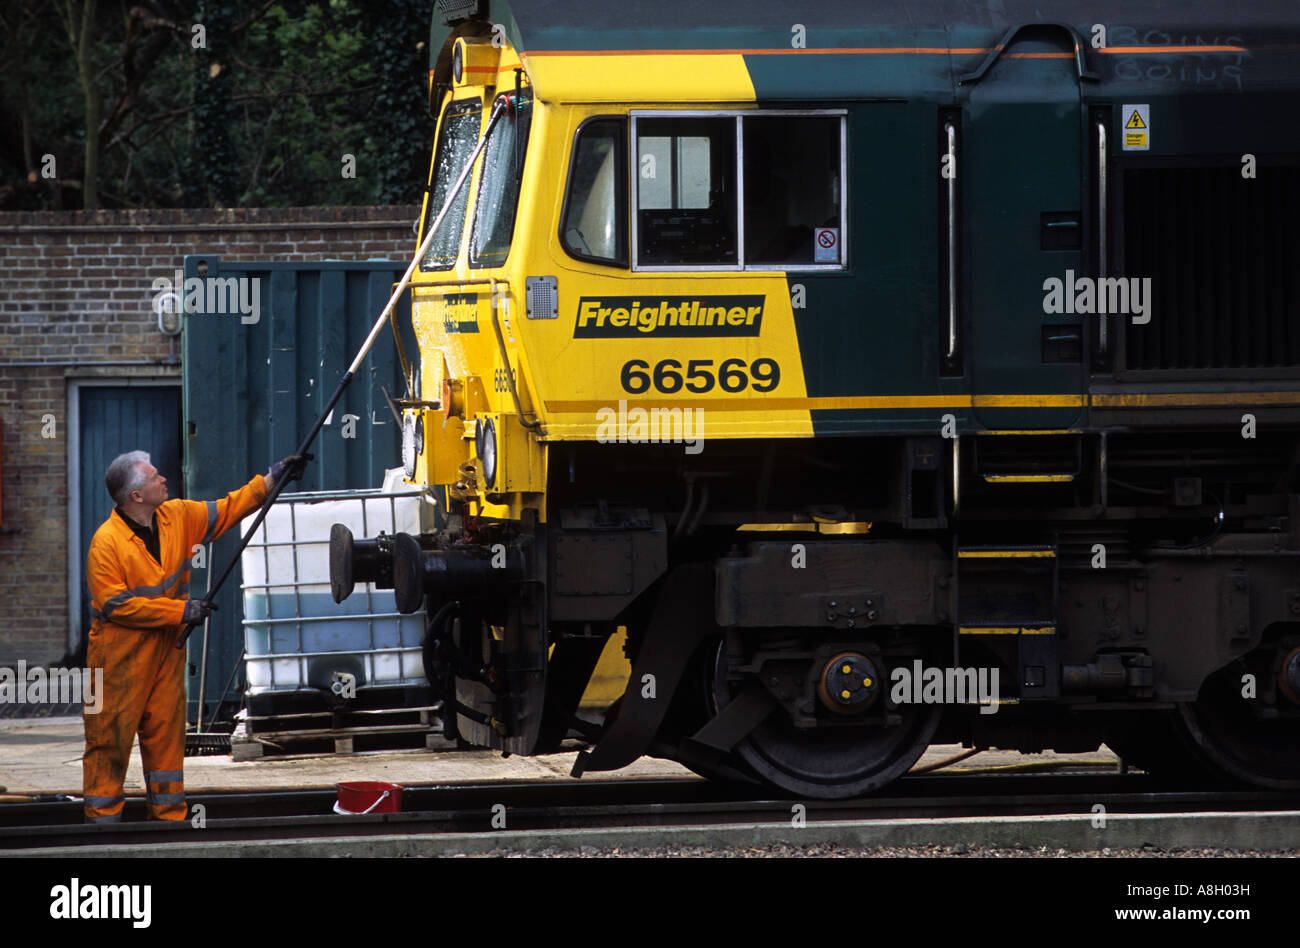 Freightliner Class 66 diesel locomotive being cleaned, Ipswich, Suffolk, UK. Stock Photo